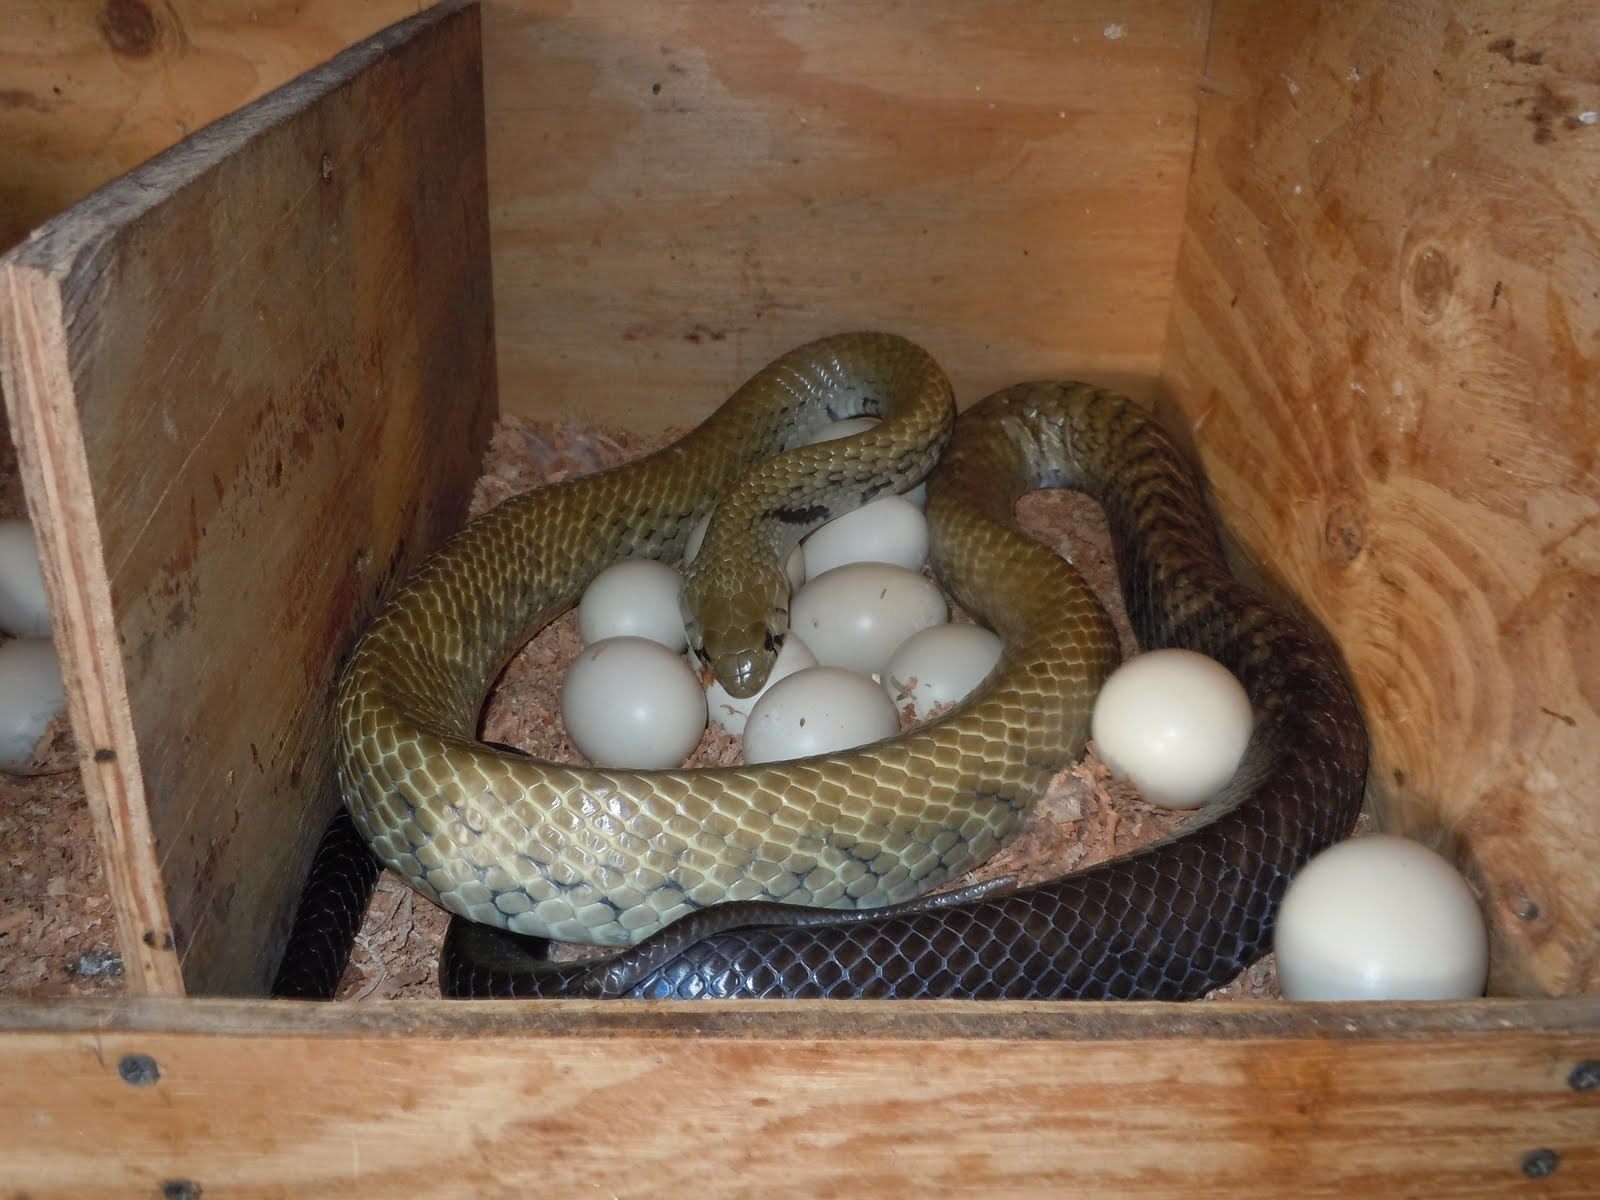 Predator Guard snake with chicken eggs